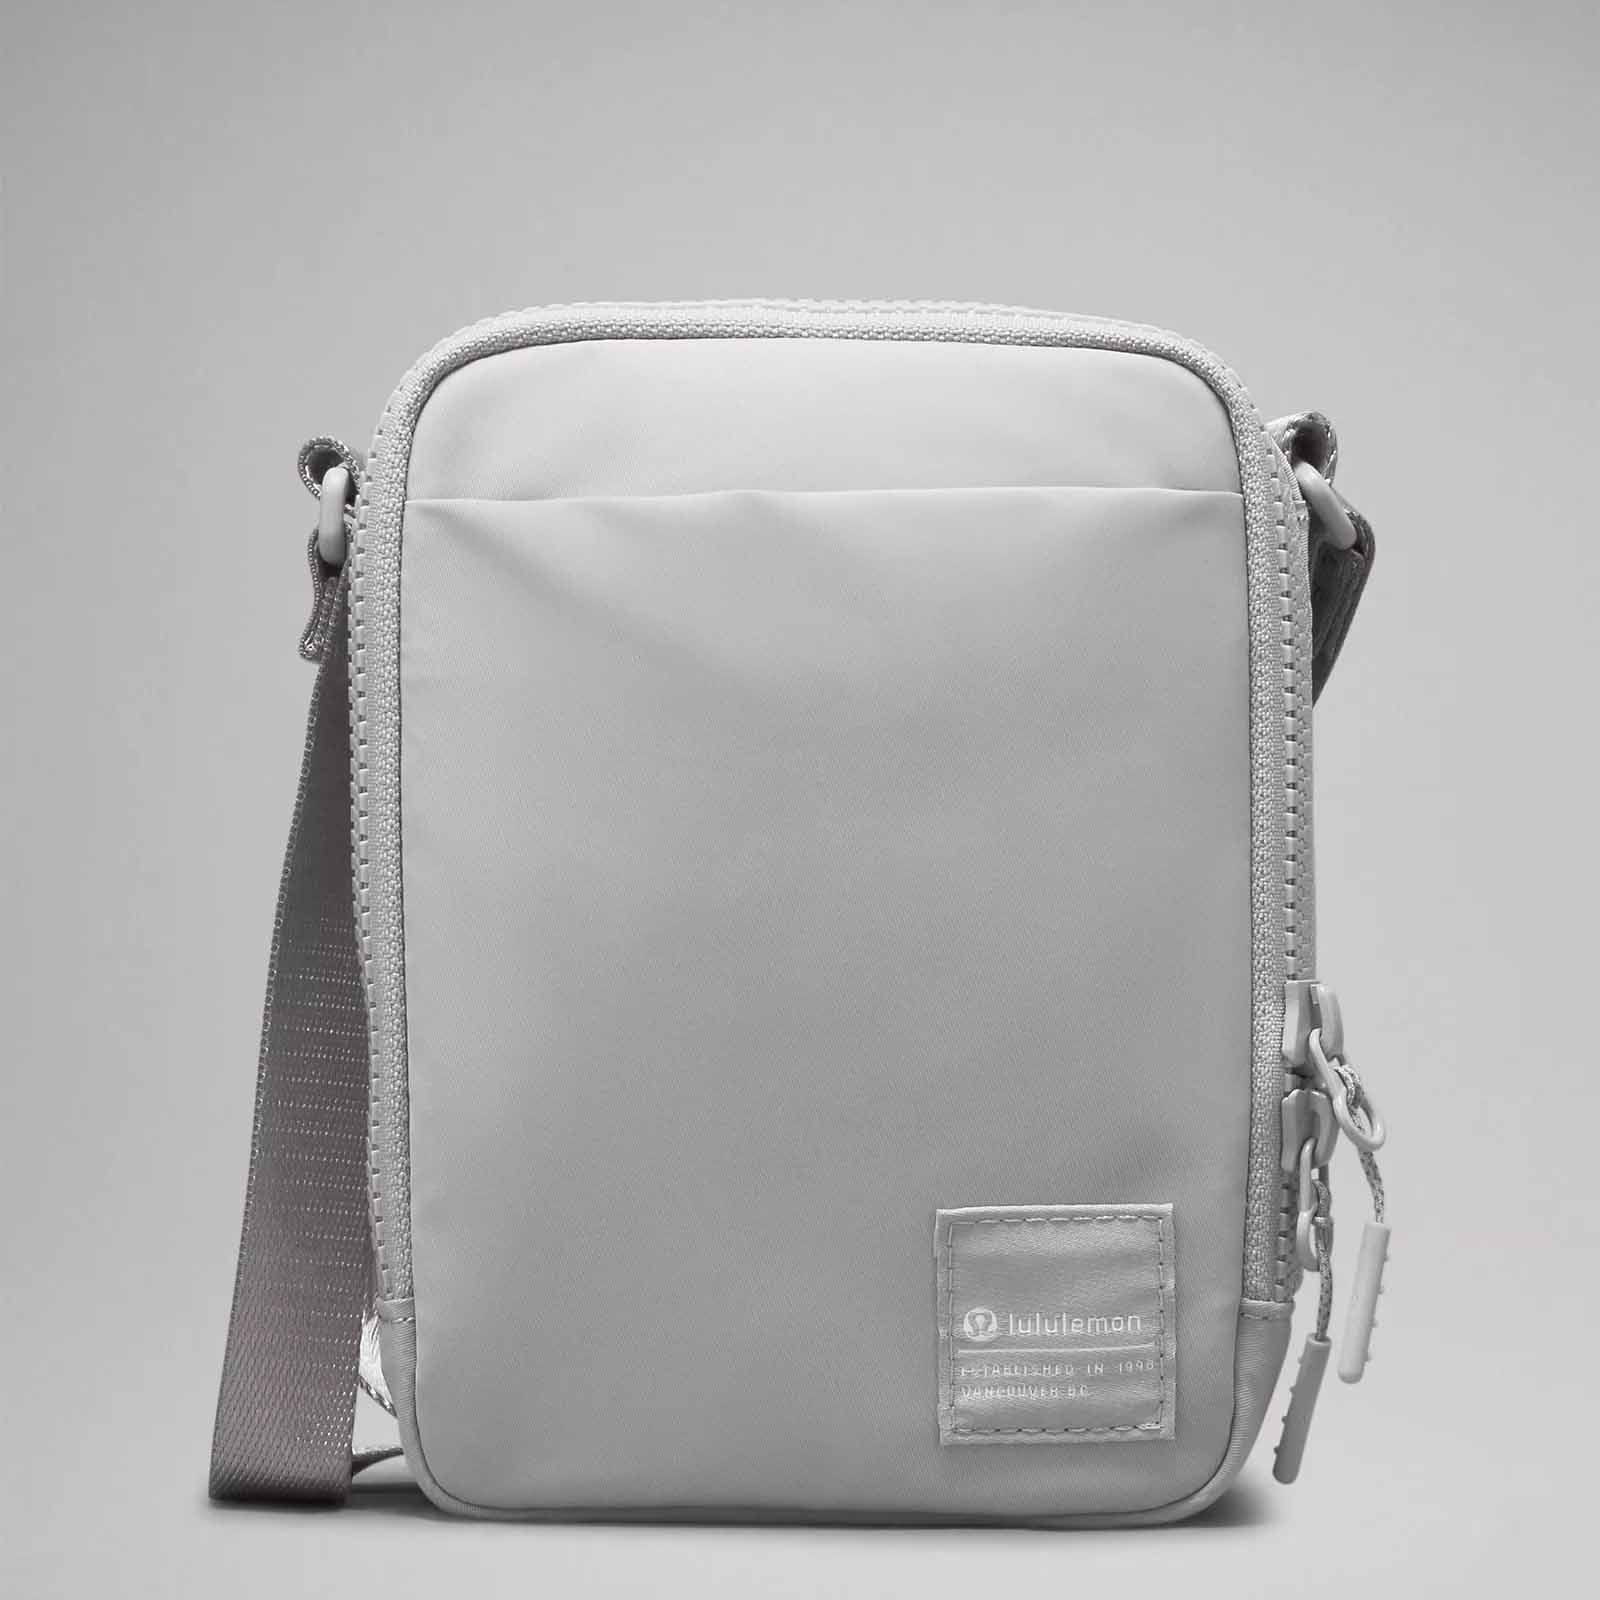 Lululemon Easy Access Crossbody Bag 1.5 L in silver